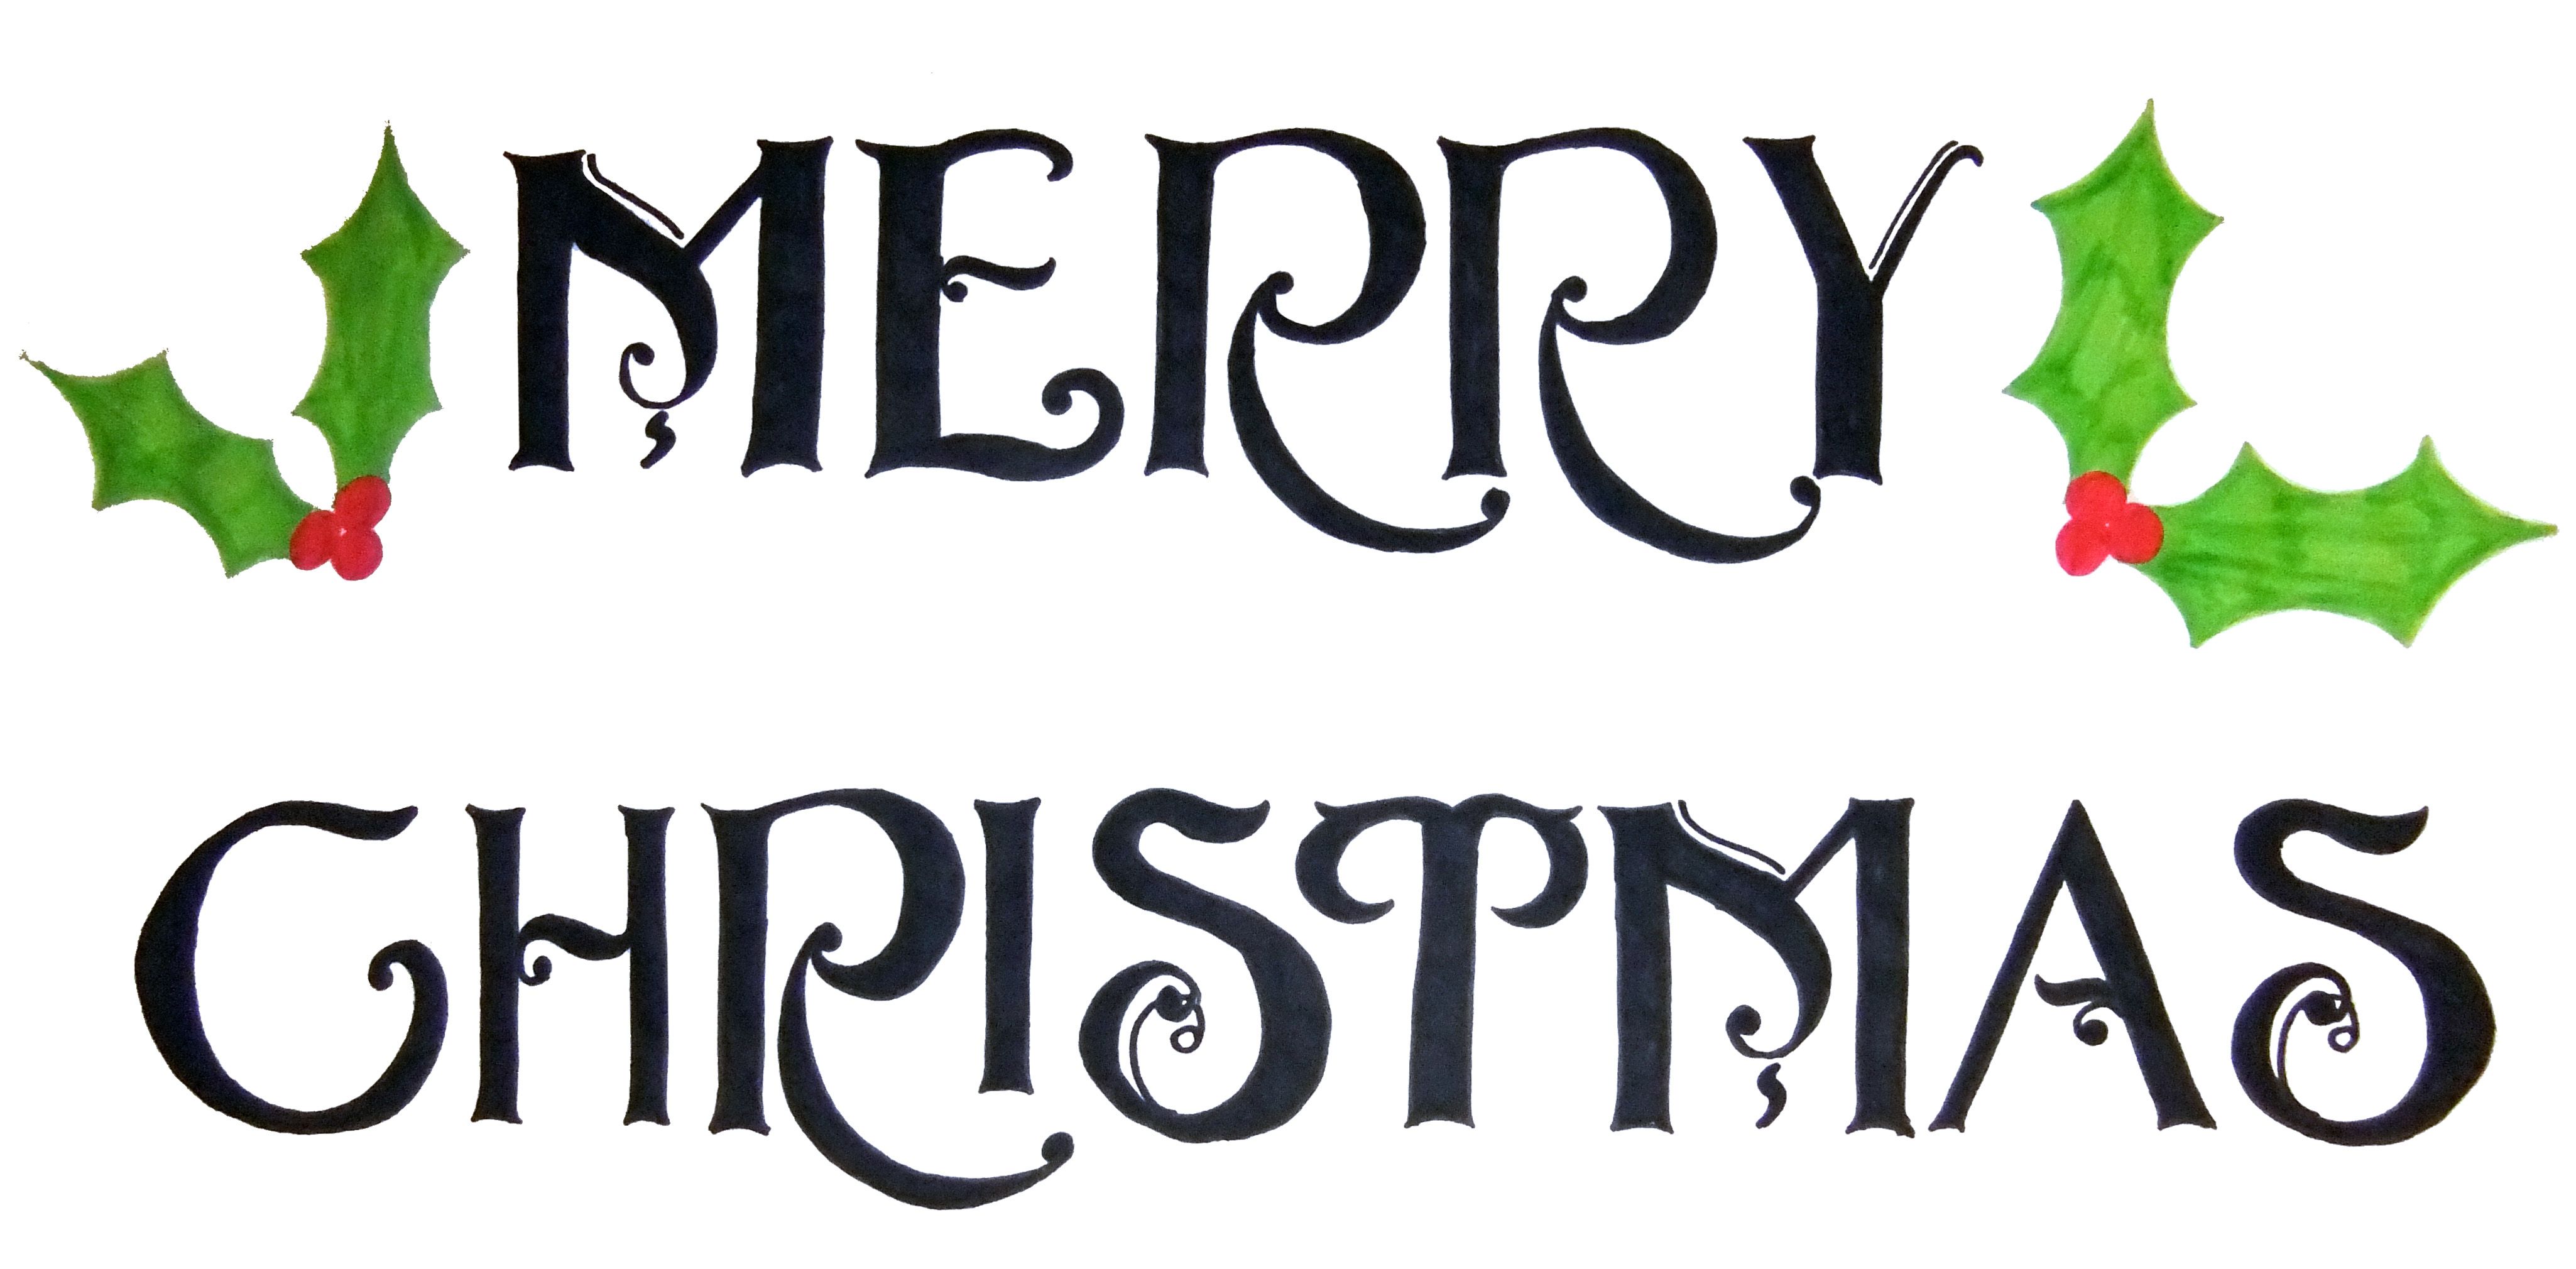 Christmas Word Stencils. Christmas words, Christmas stencils, Word stencils